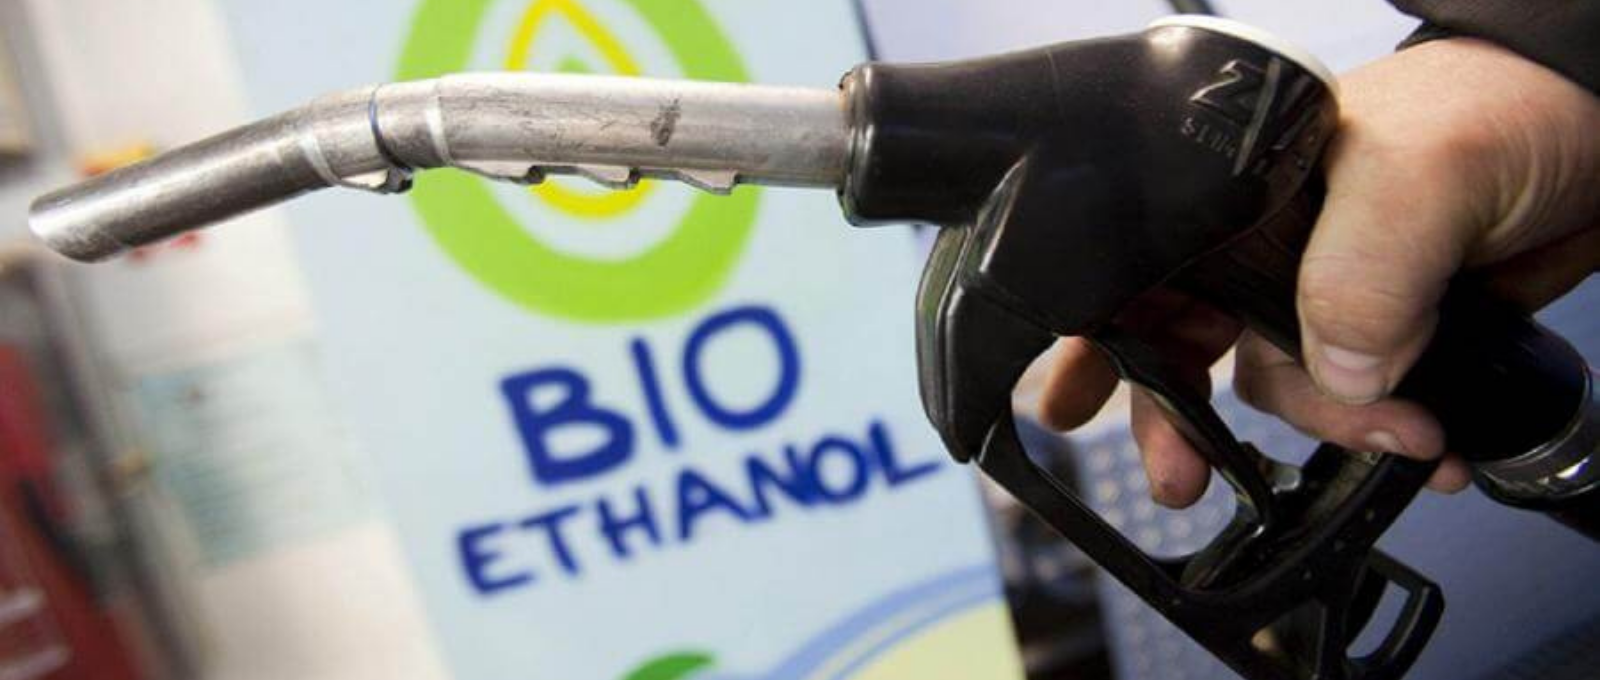 Biocarburant carburants propres